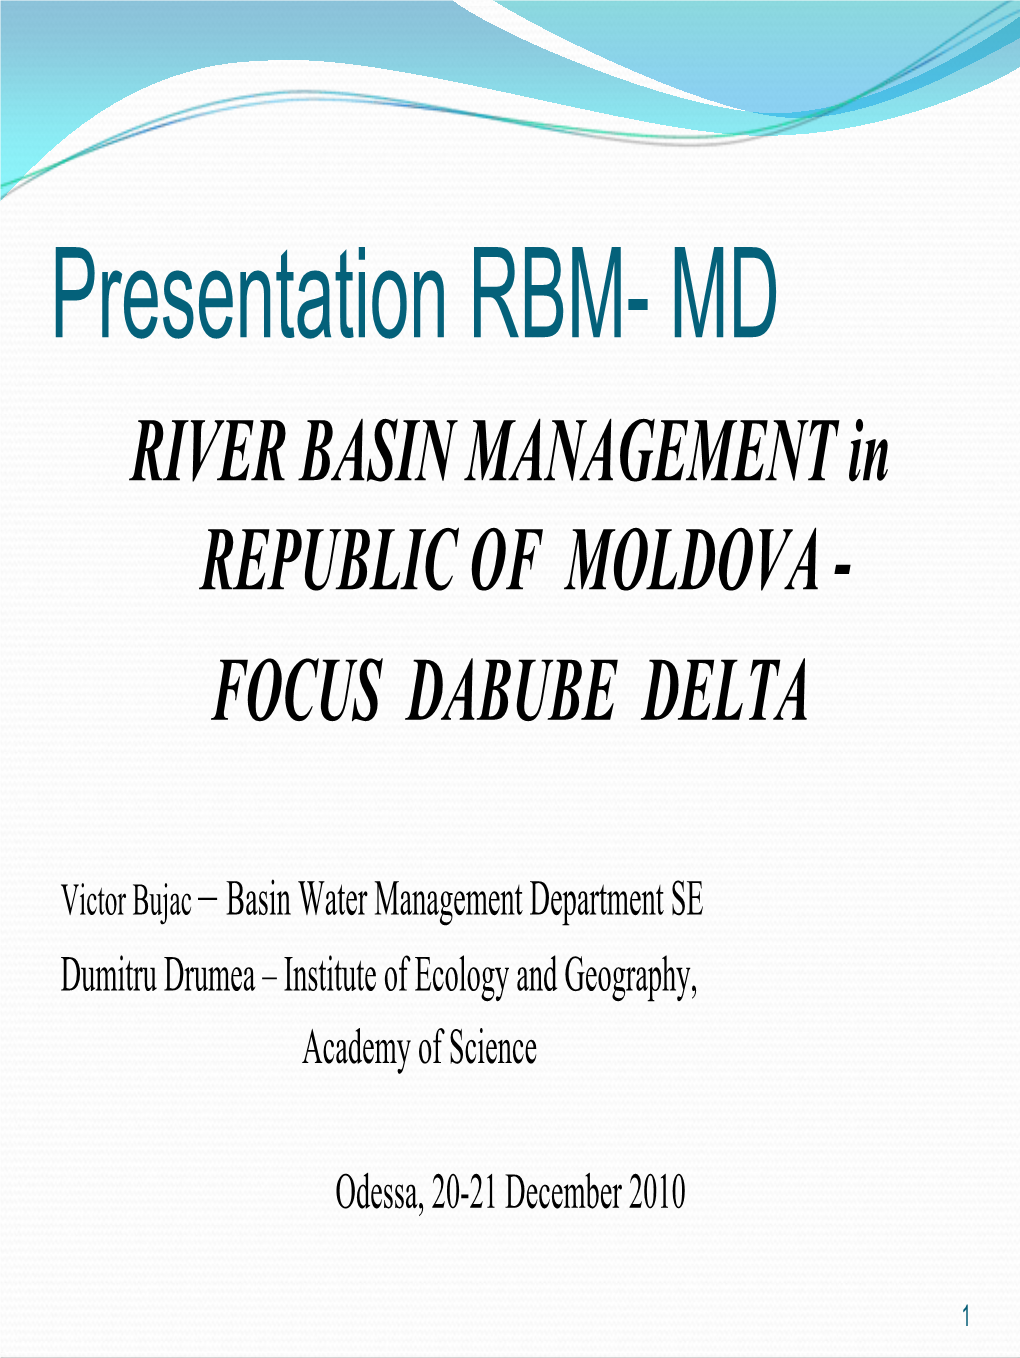 River Basin Management in Republic of Moldova. Focus Danube Delta